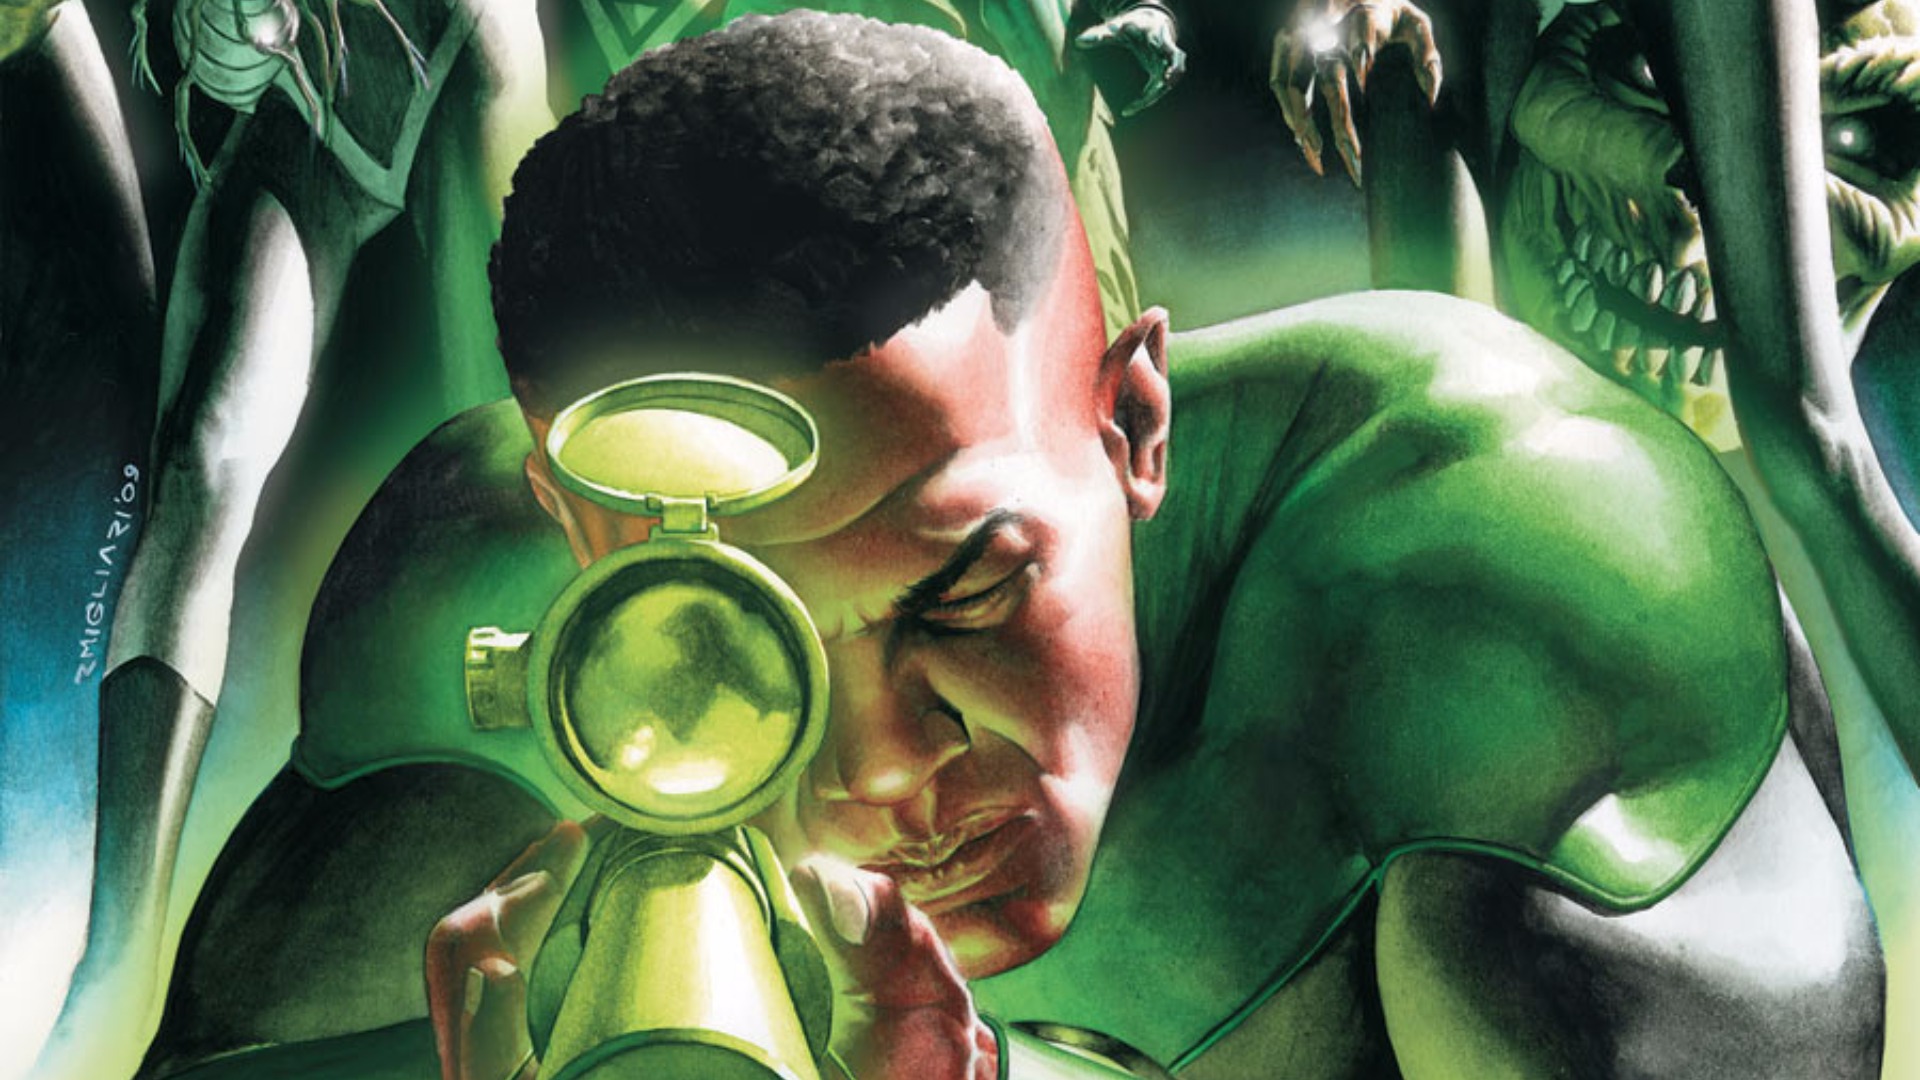 Tyrese Confirms Green Lantern Talks With Warner Bros